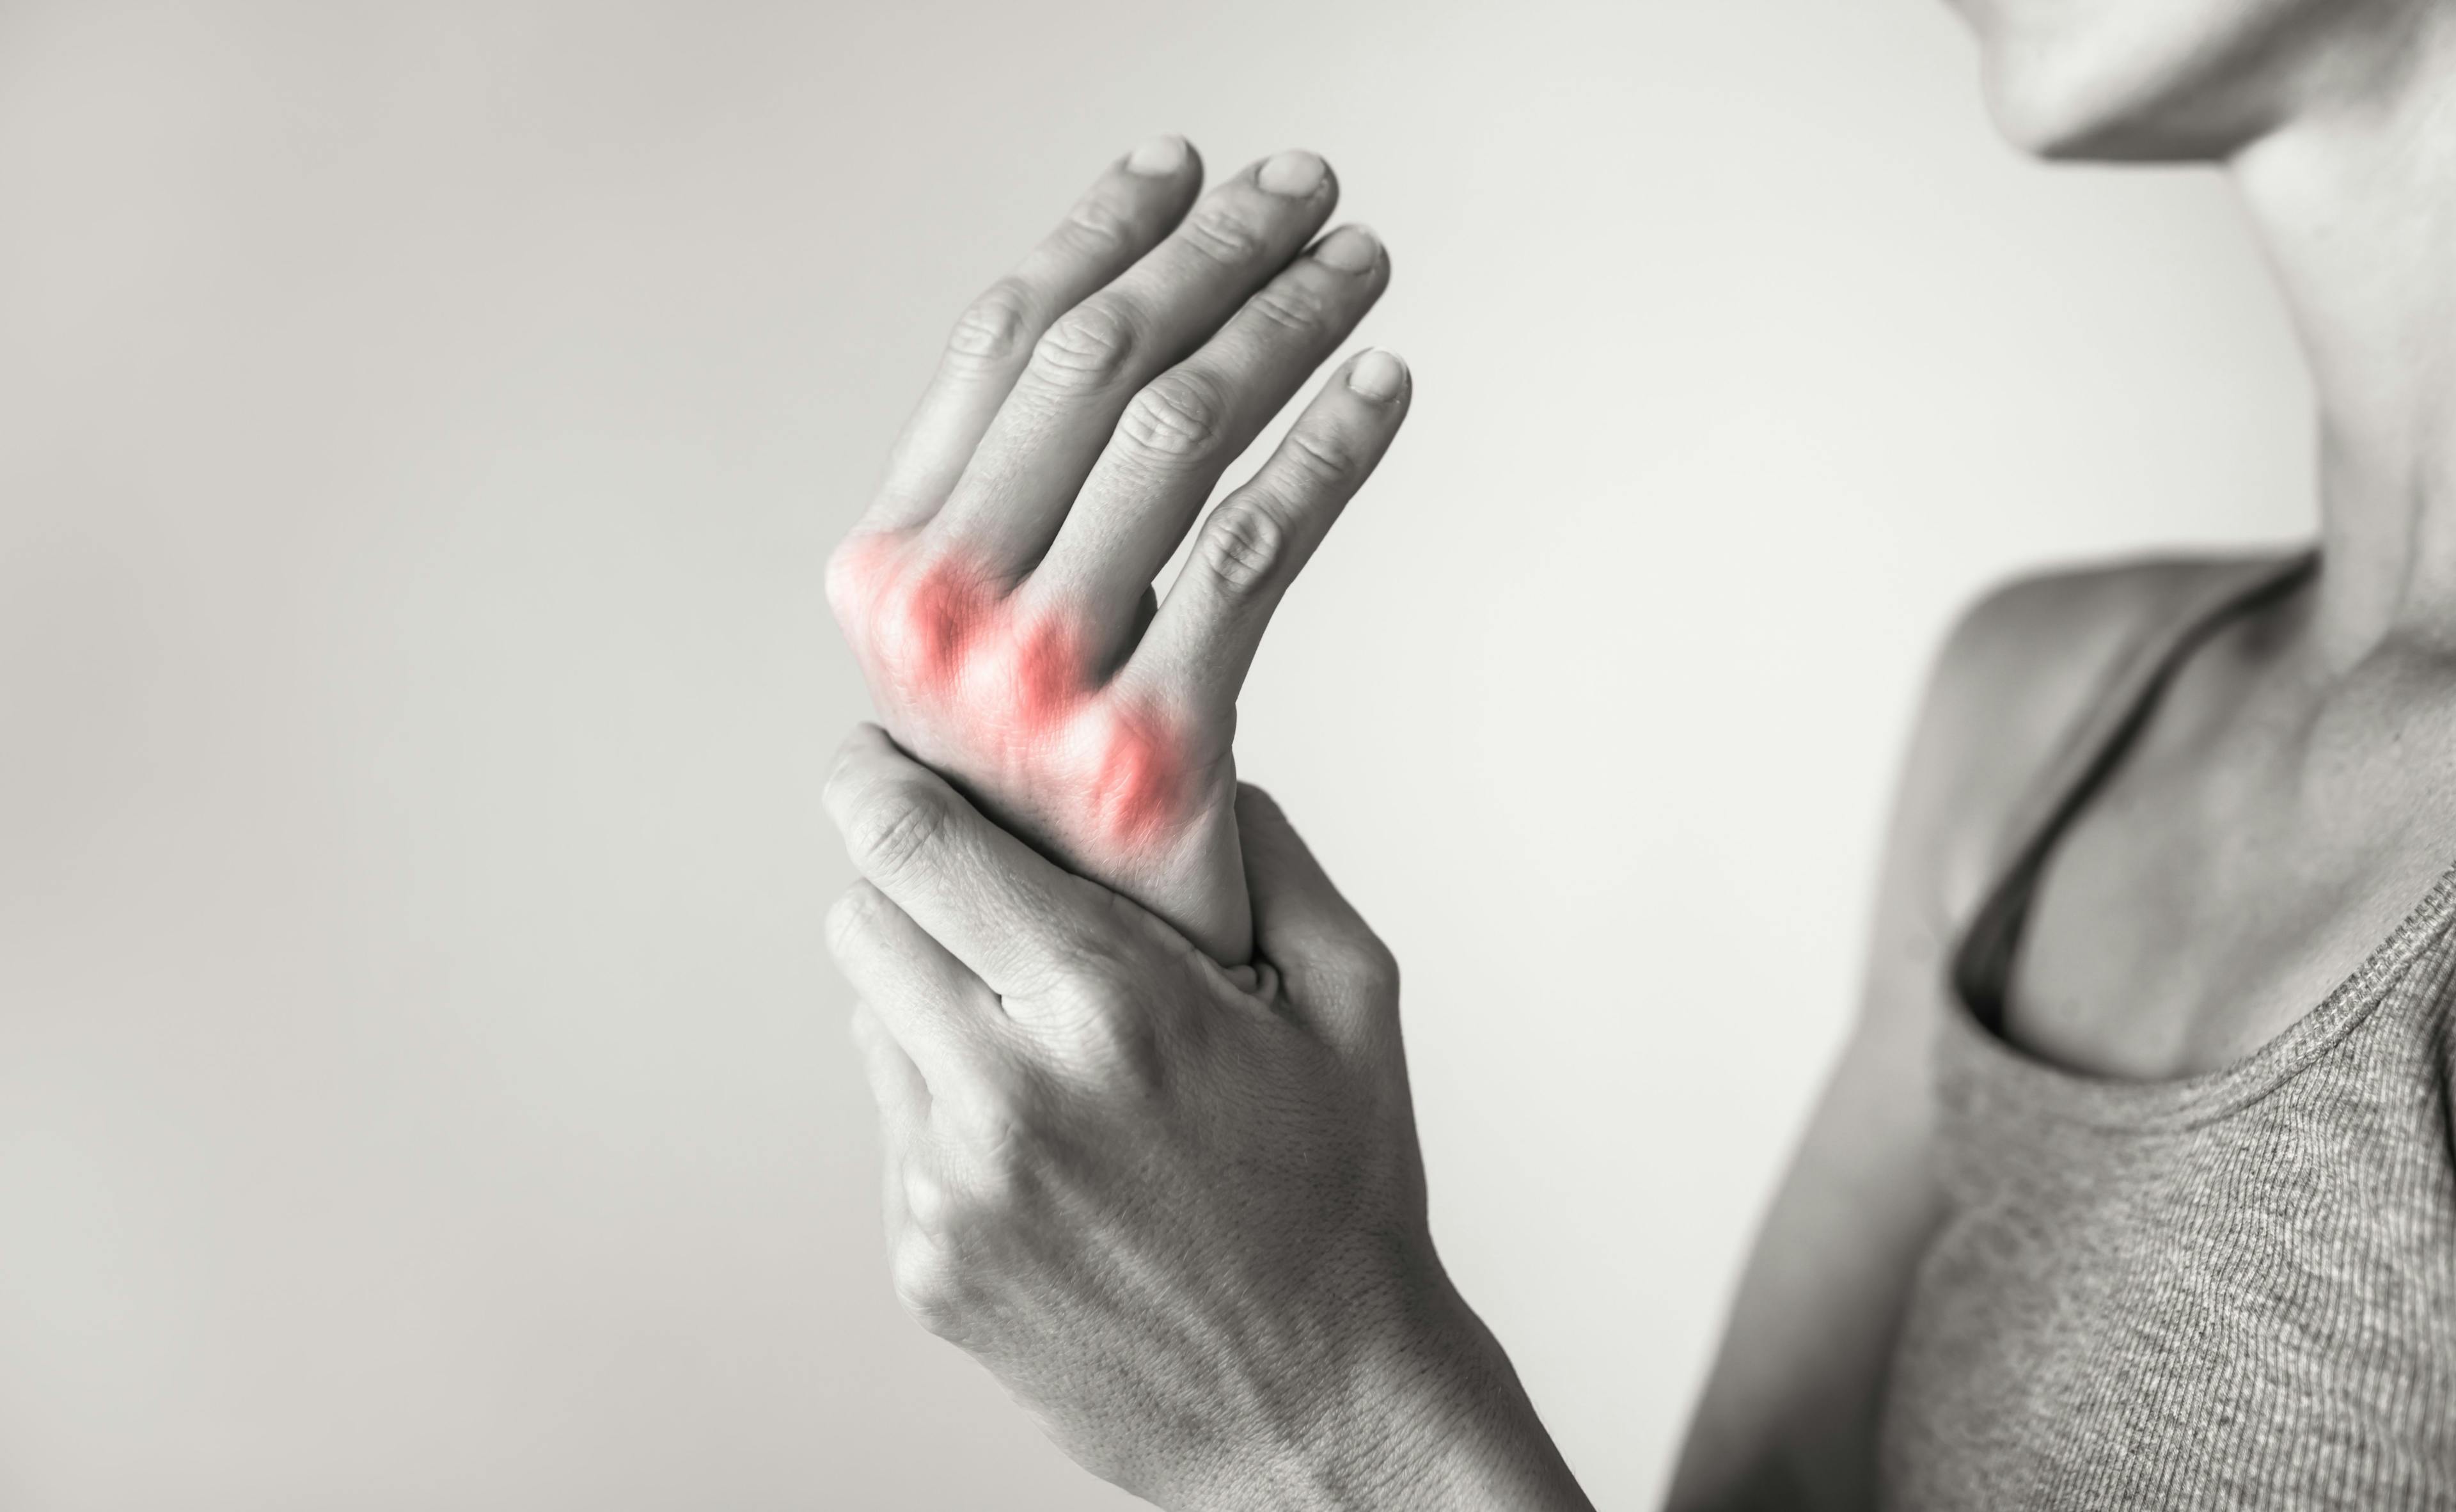 Woman Enduring Arthritic Pain in Hand | image credit: keiferpix - stock.adobe.com